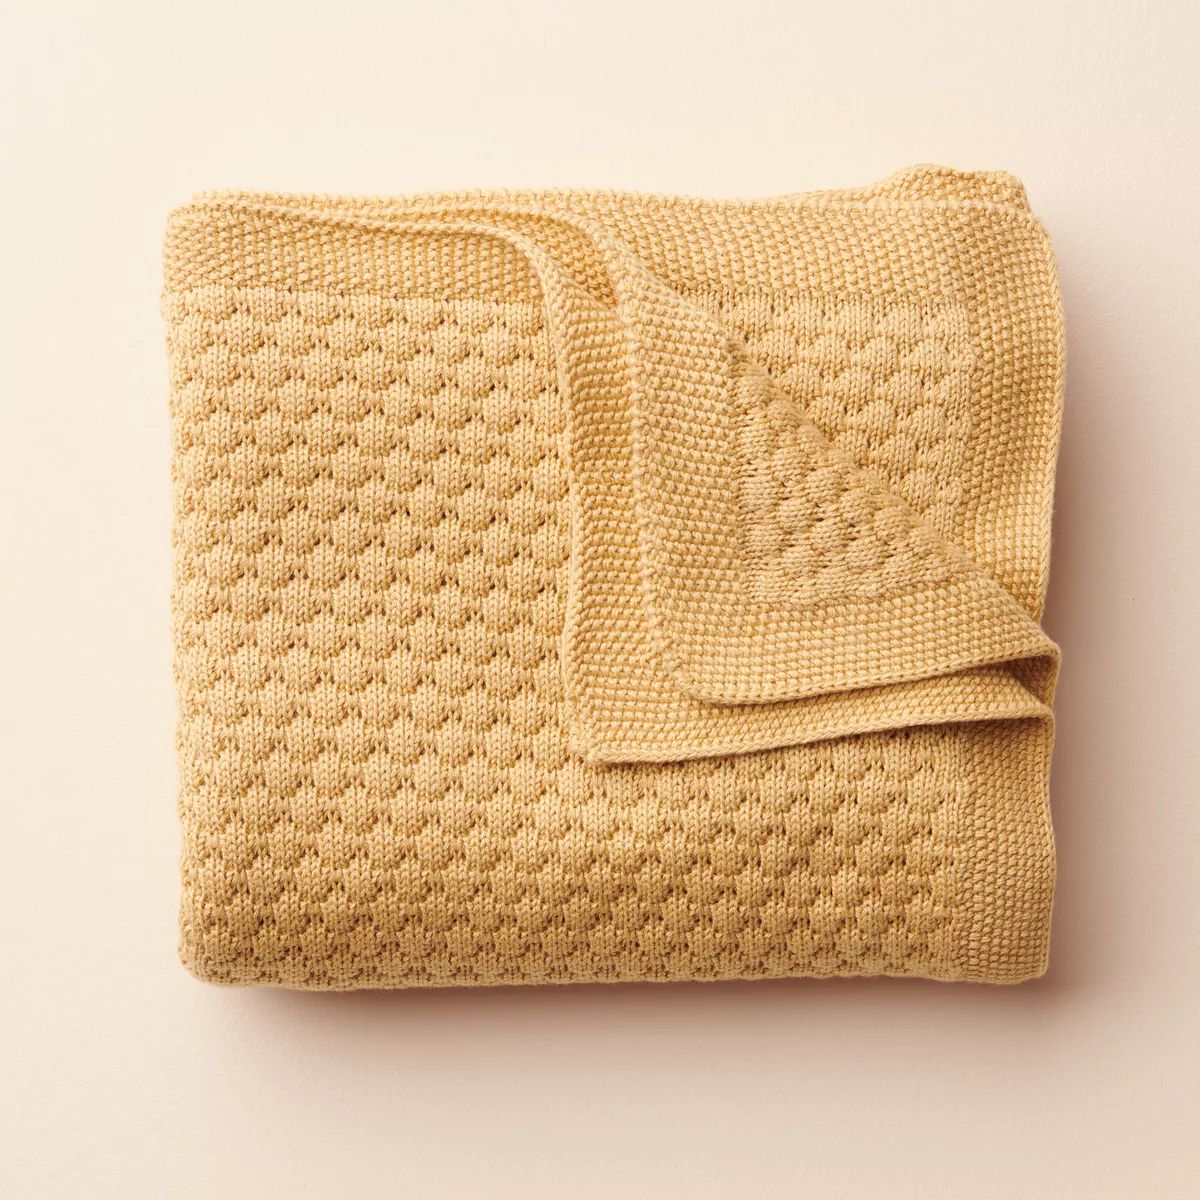 Little Co. by Lauren Conrad Throw Blanket | Kohl's